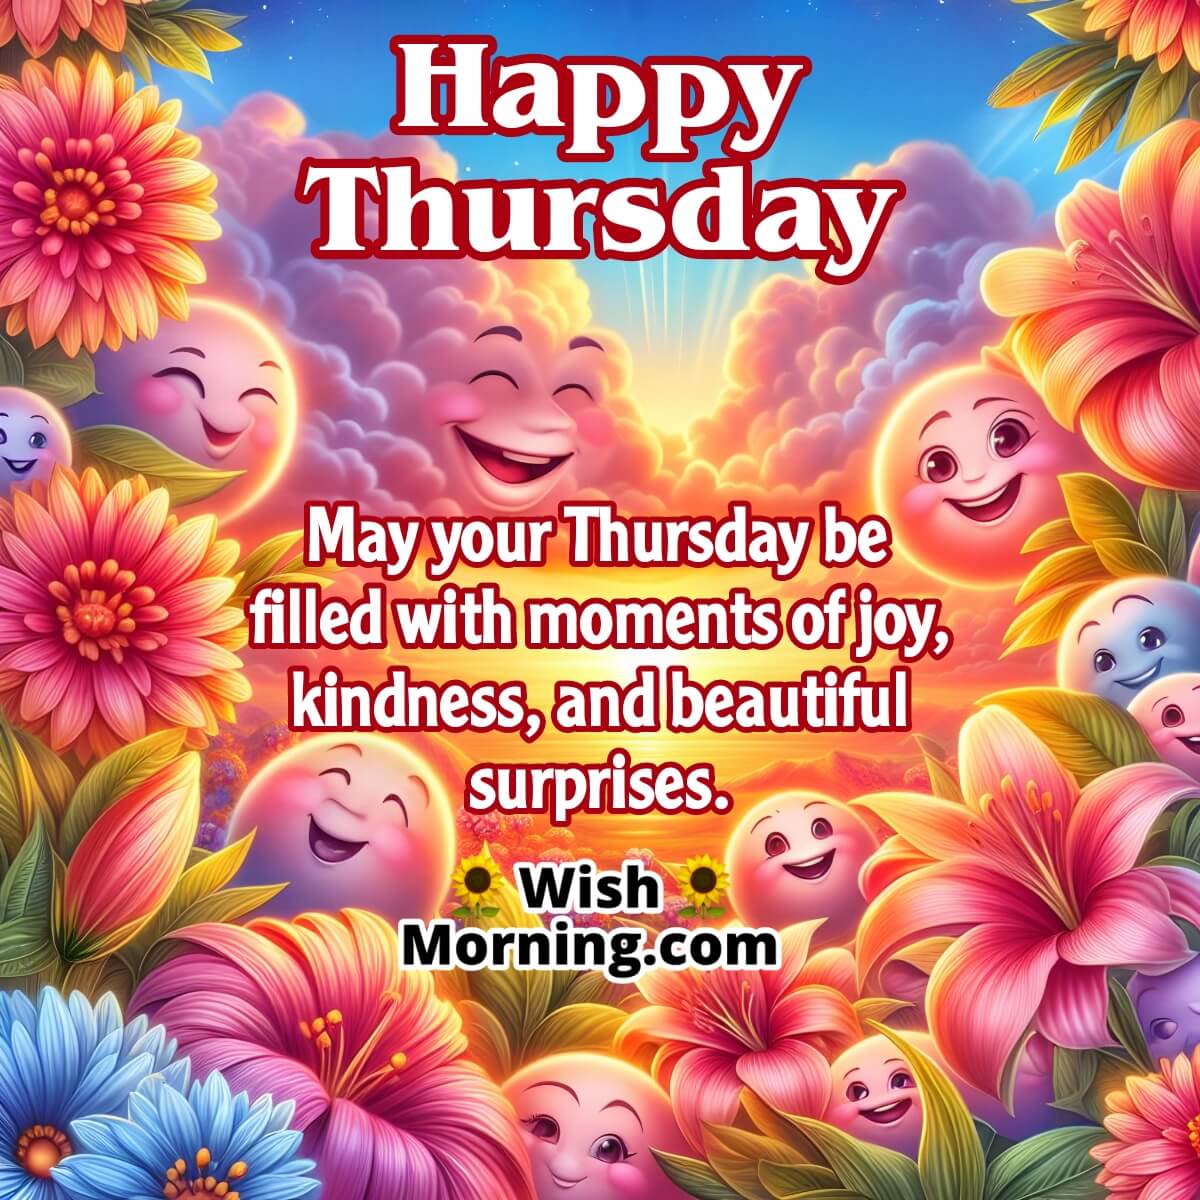 Happy Thursday Message Image